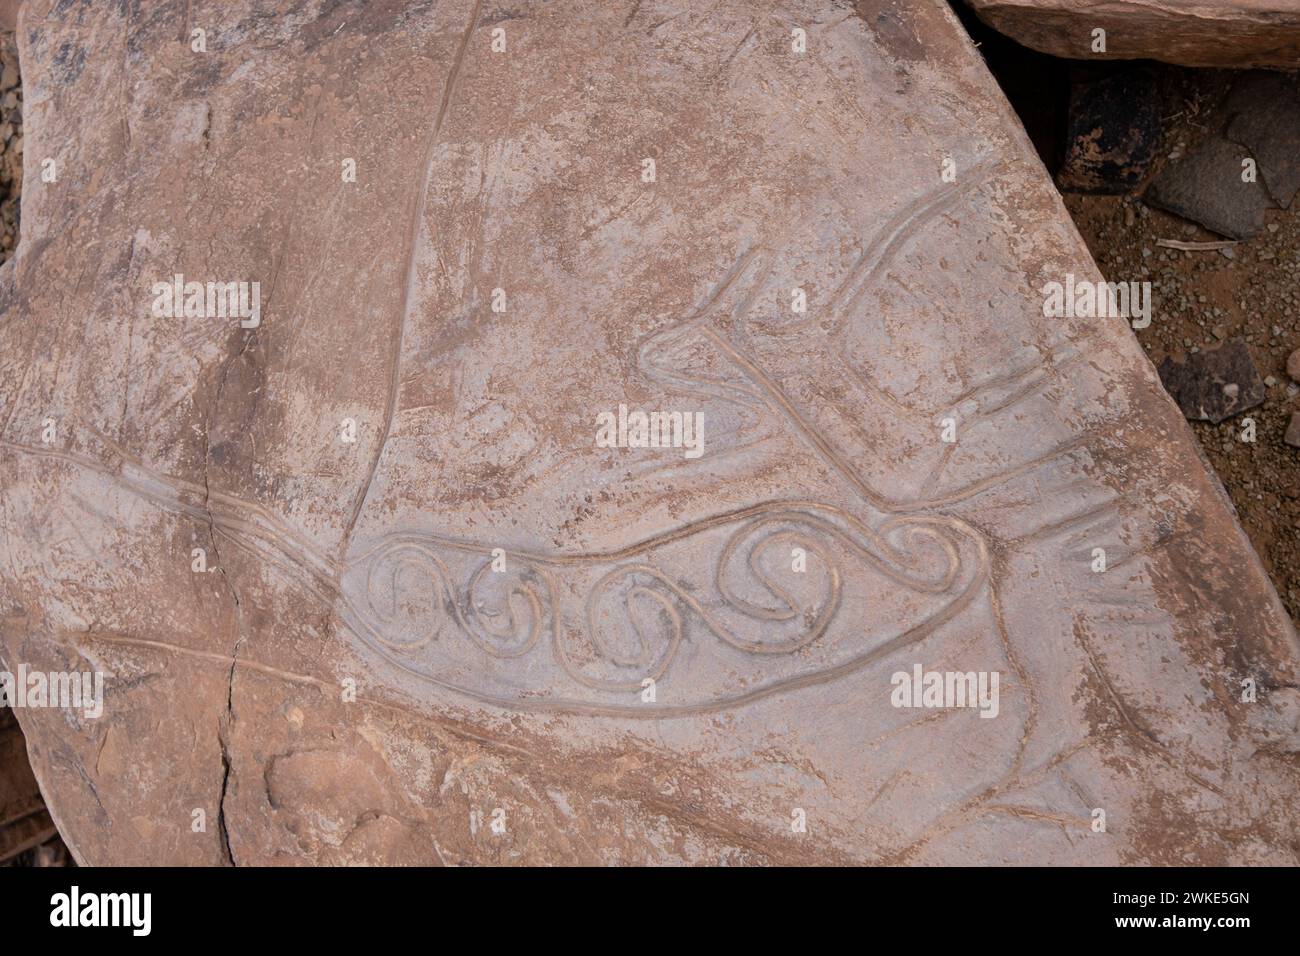 petroglifo, yacimiento rupestre de Aït Ouazik, finales del Neolítico, Marruecos, Africa. Stock Photo